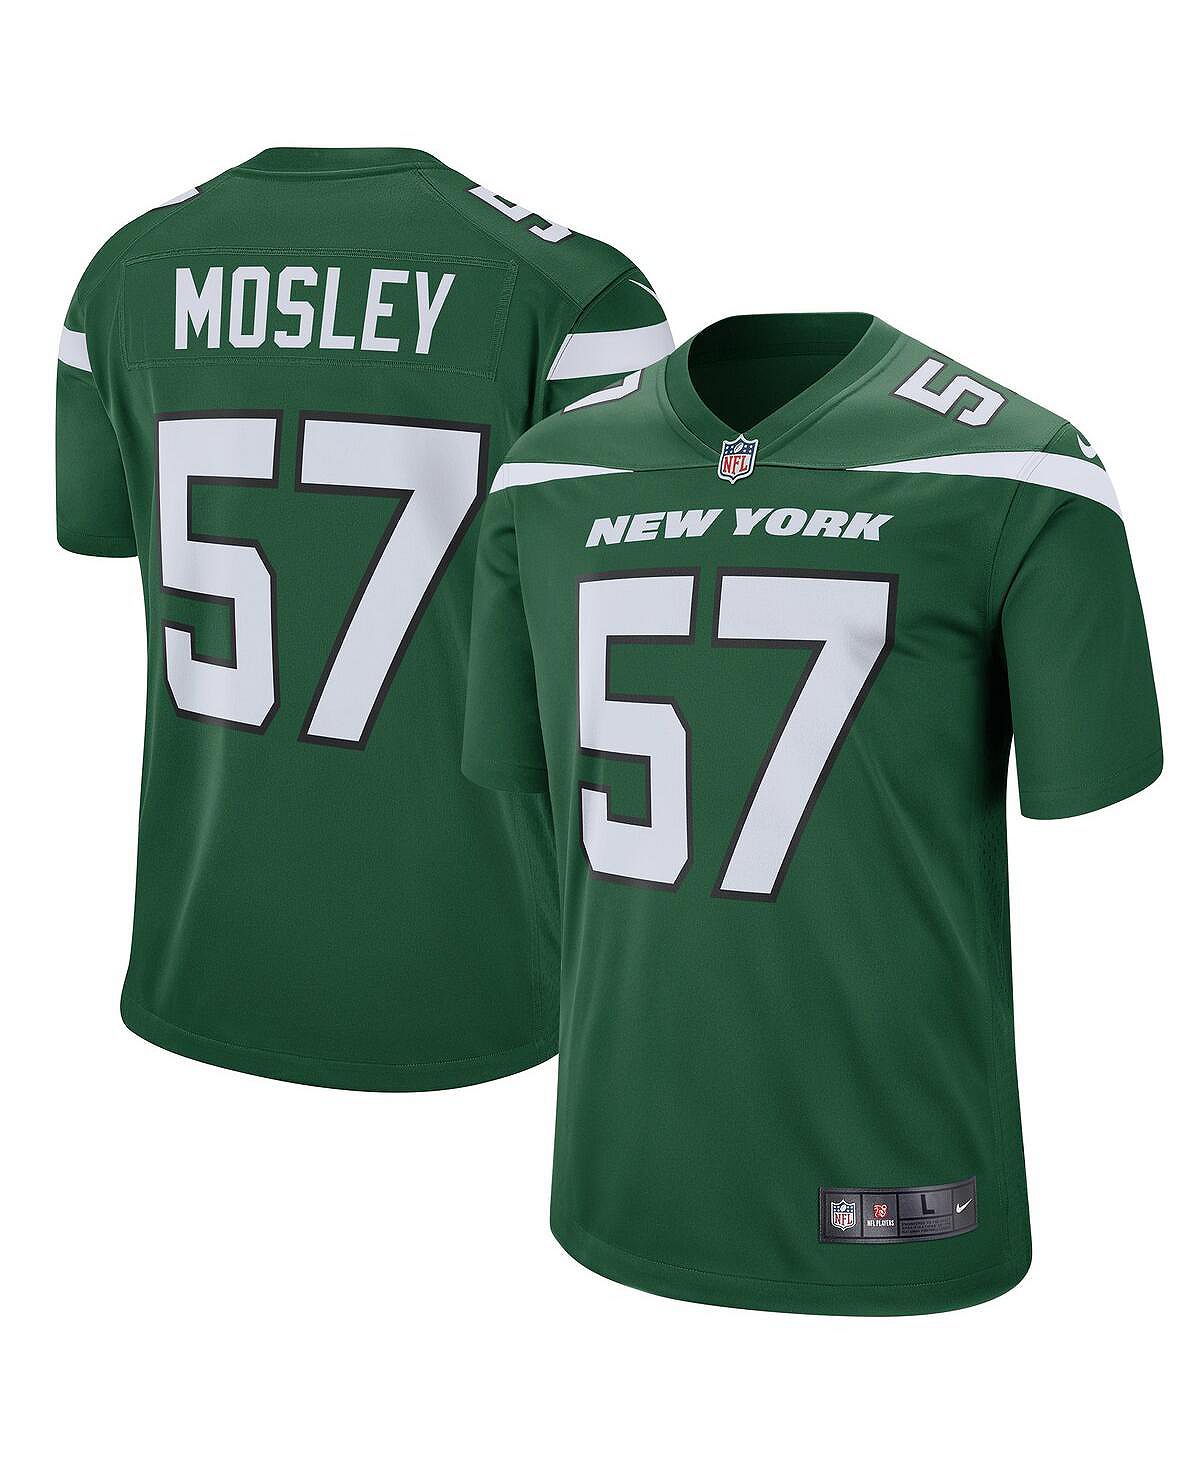 сарафан sally new york 50yy1581 Мужская футболка cj mosley gotham green new york jets game jersey Nike, зеленый